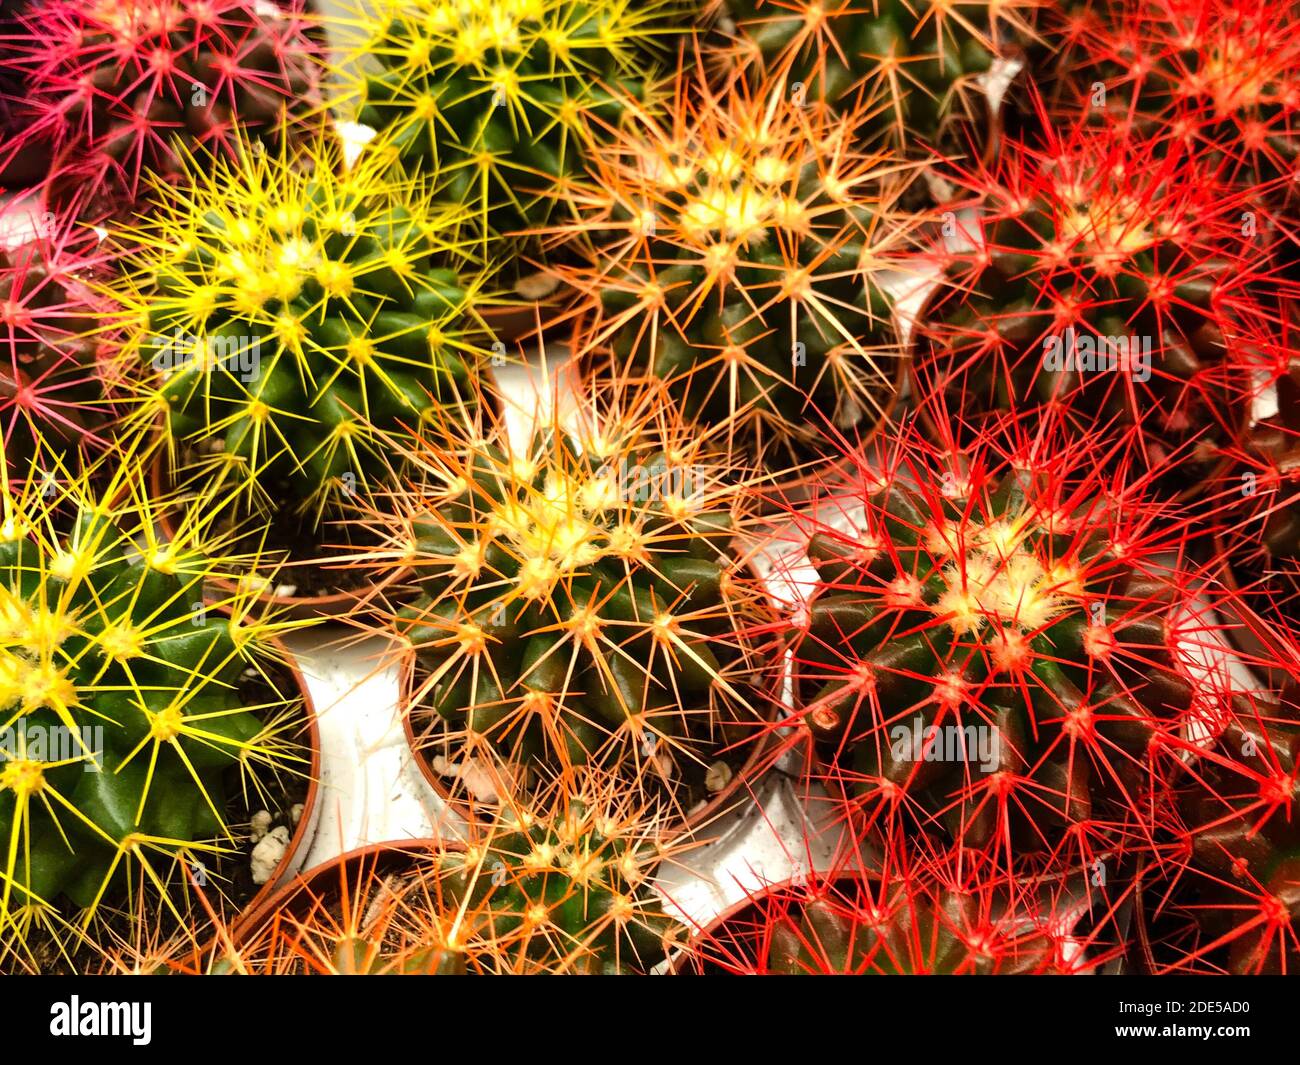 piante di cactus colorate, decorazioni colorate di cactus in miniatura Foto Stock